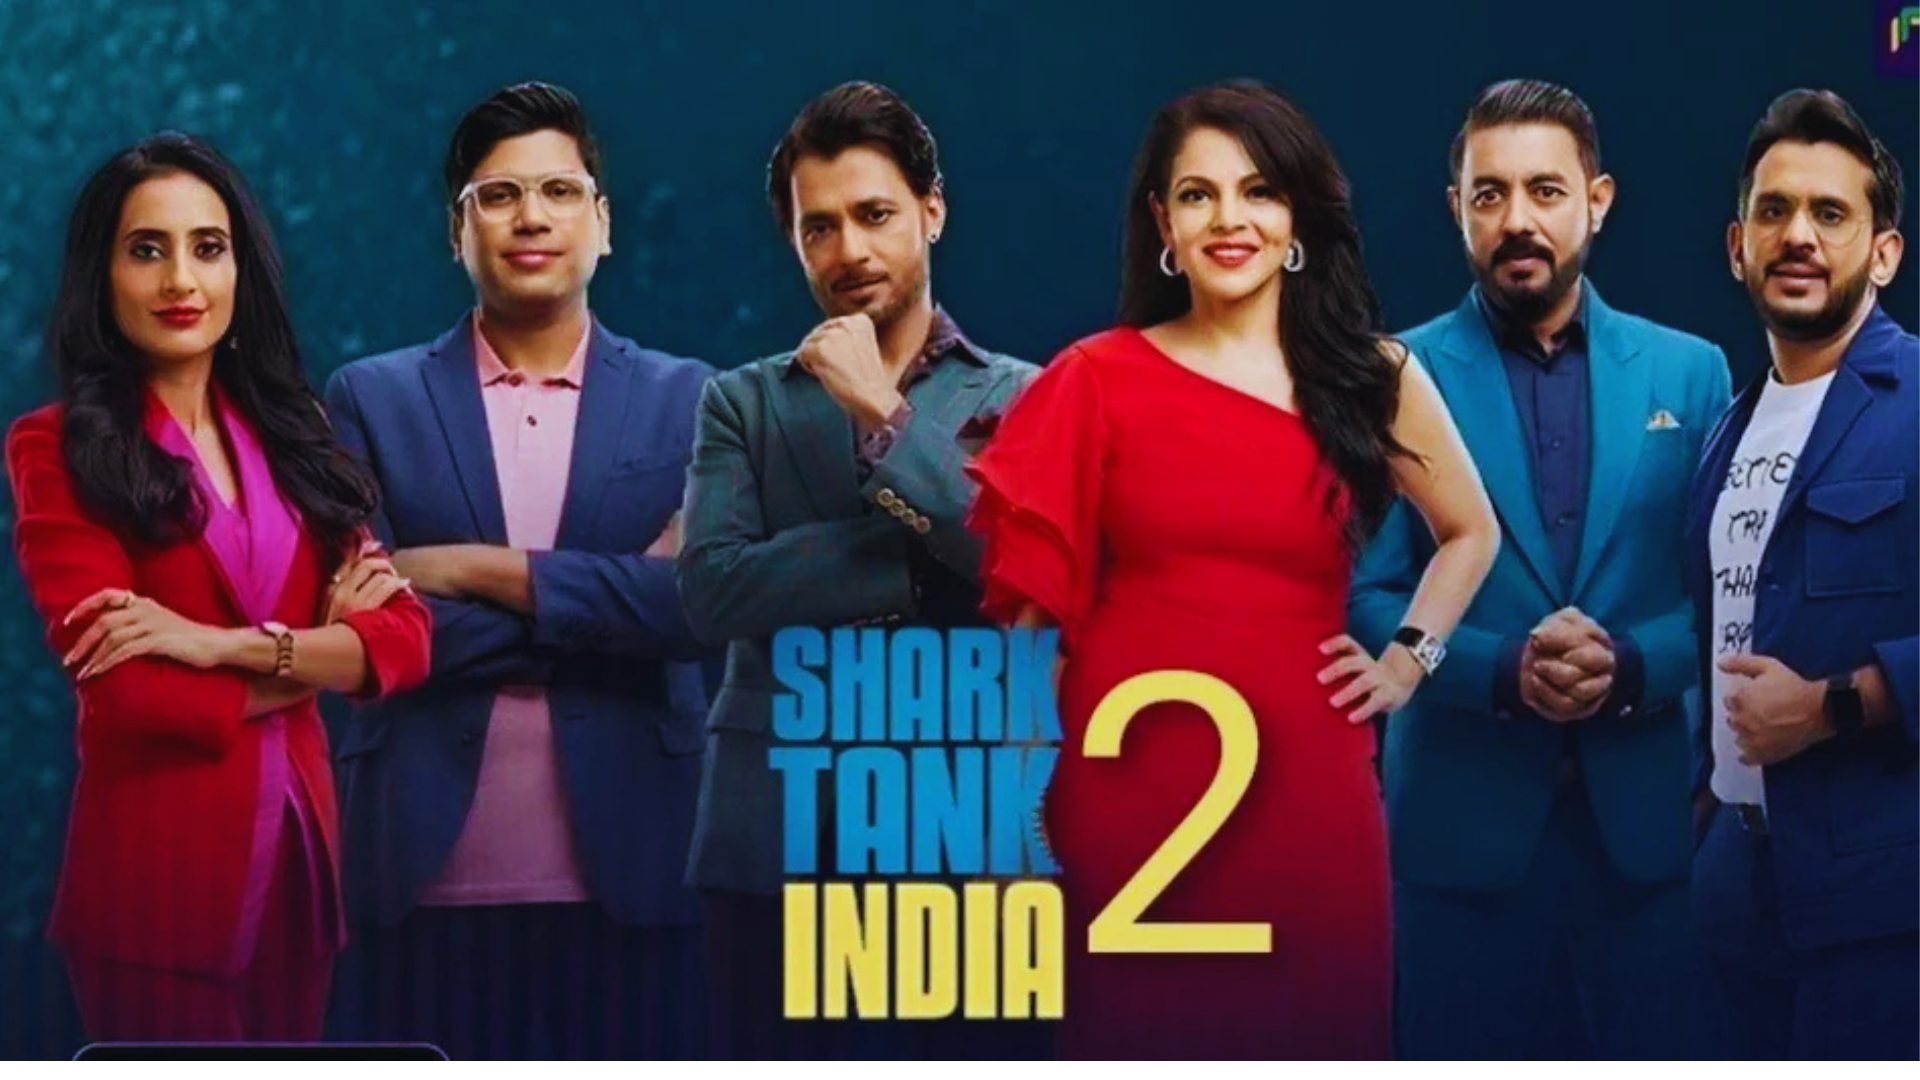 Shark tank india season 2 episode 3